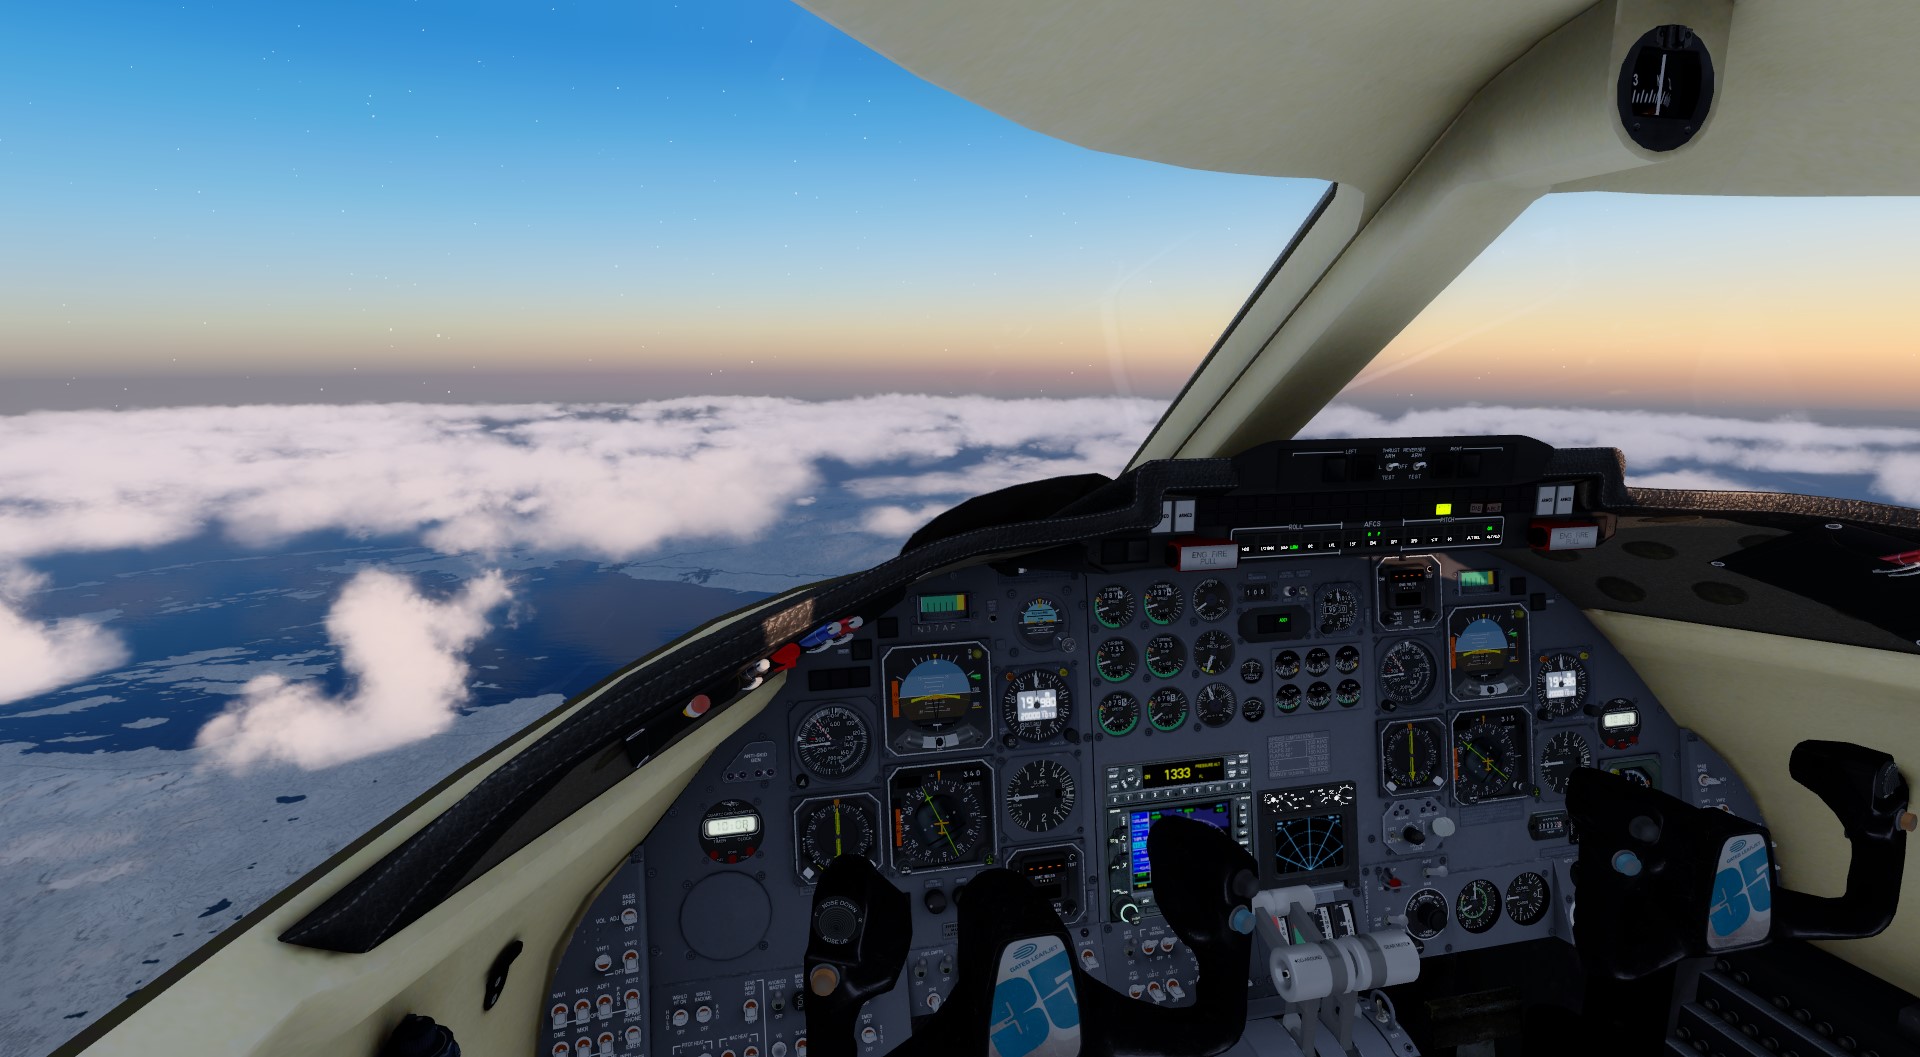 Flysimware – Learjet 35A 评测与冰岛送货之旅-9391 